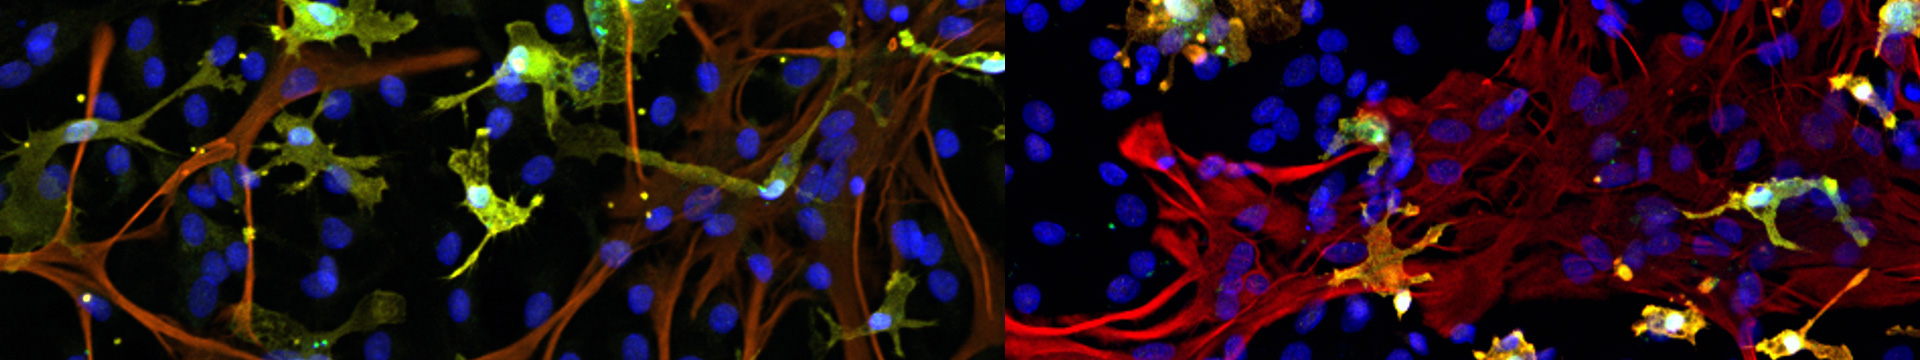 Microglia & neurons